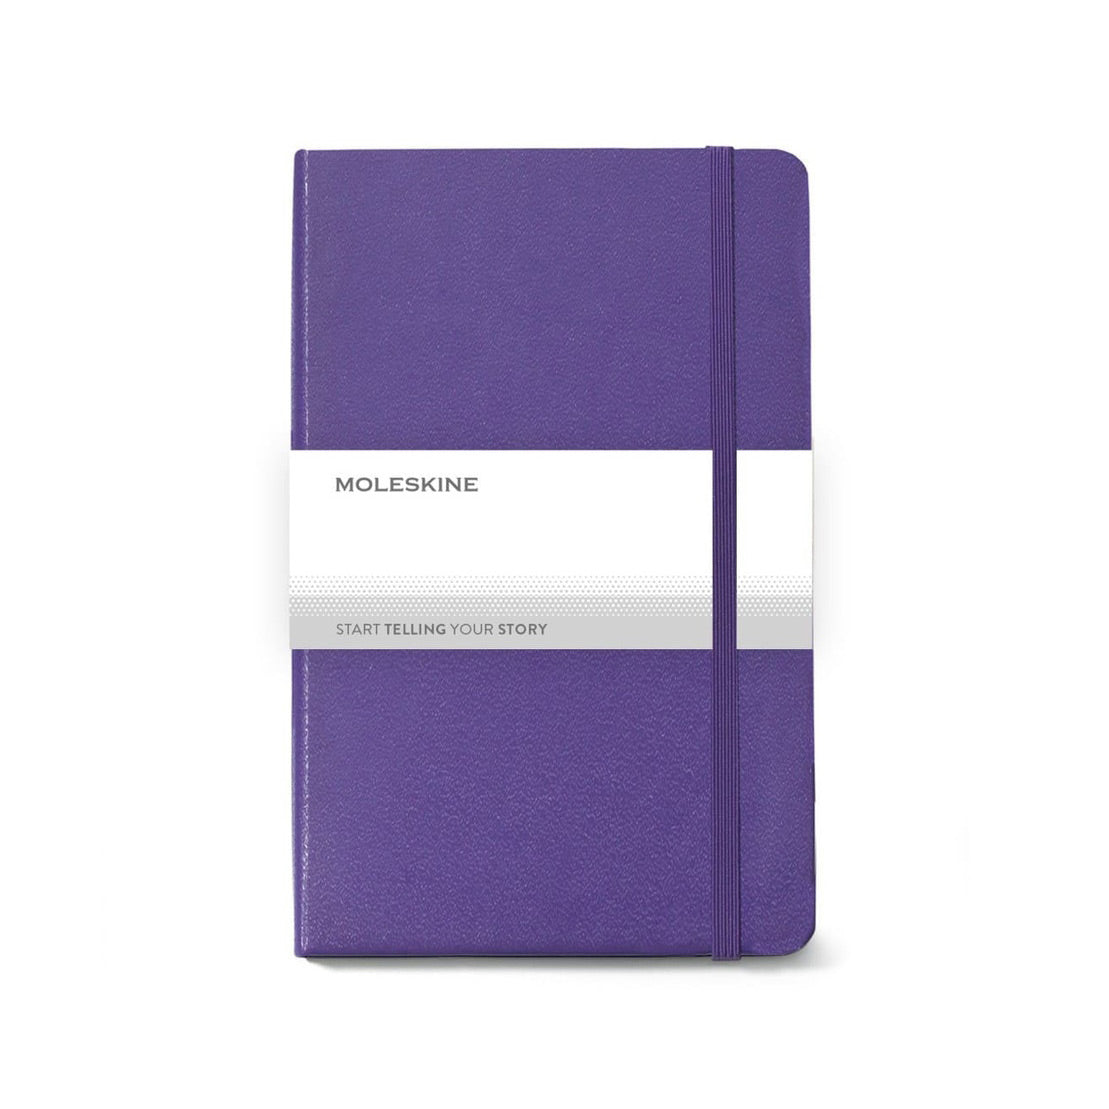 Moleskine Classic Hard Cover Large Ruled Notebook Brilliant Violet